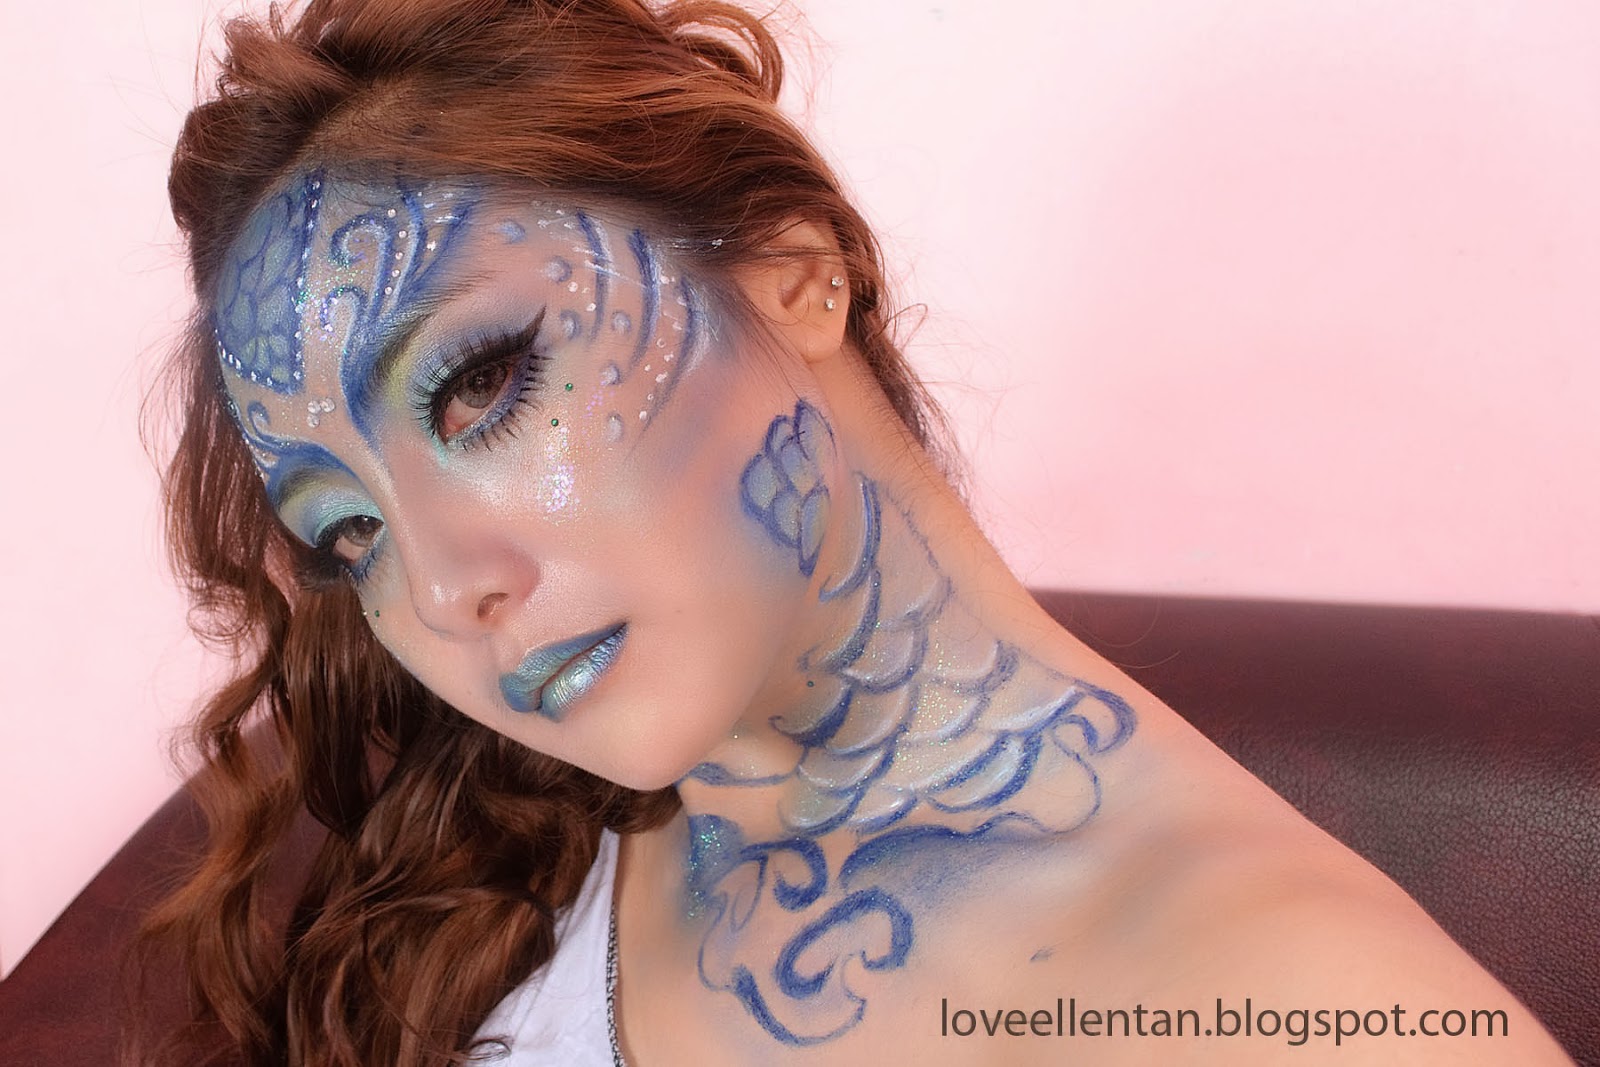 Mermaid Everyday Is Halloween Makeup Challenge